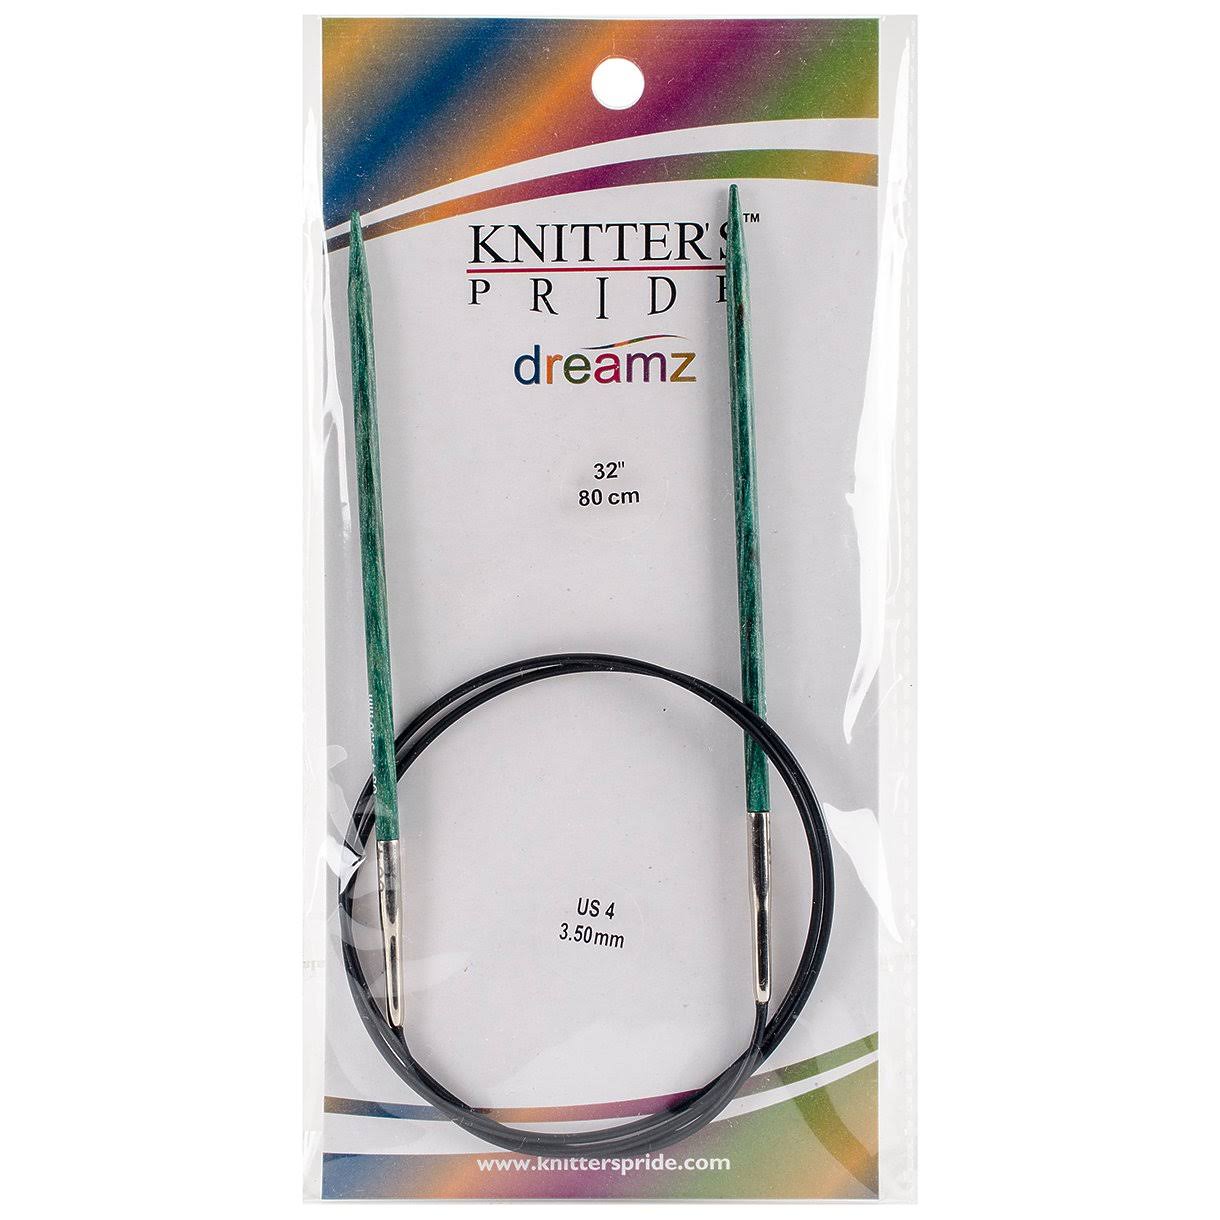 Knitters Pride Dreamz Circular Knitting Needles - 32", Size 4